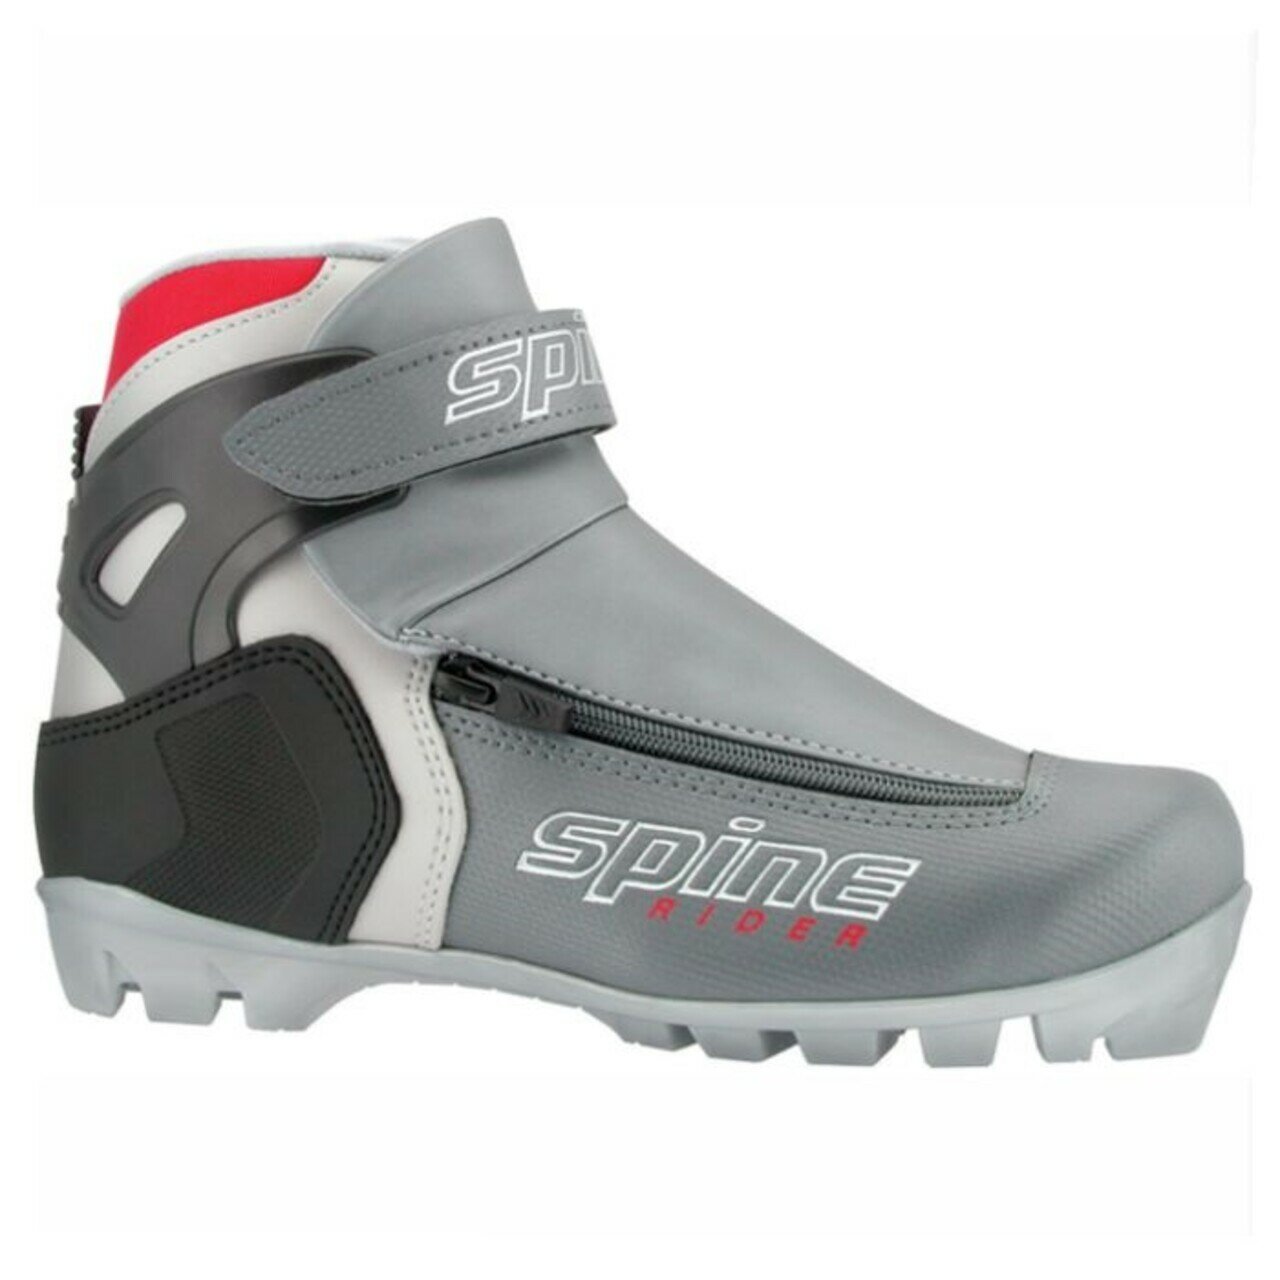 Ботинки лыжный Spine Riber, NNN, размер 42, модель 20/7, цвет серый.